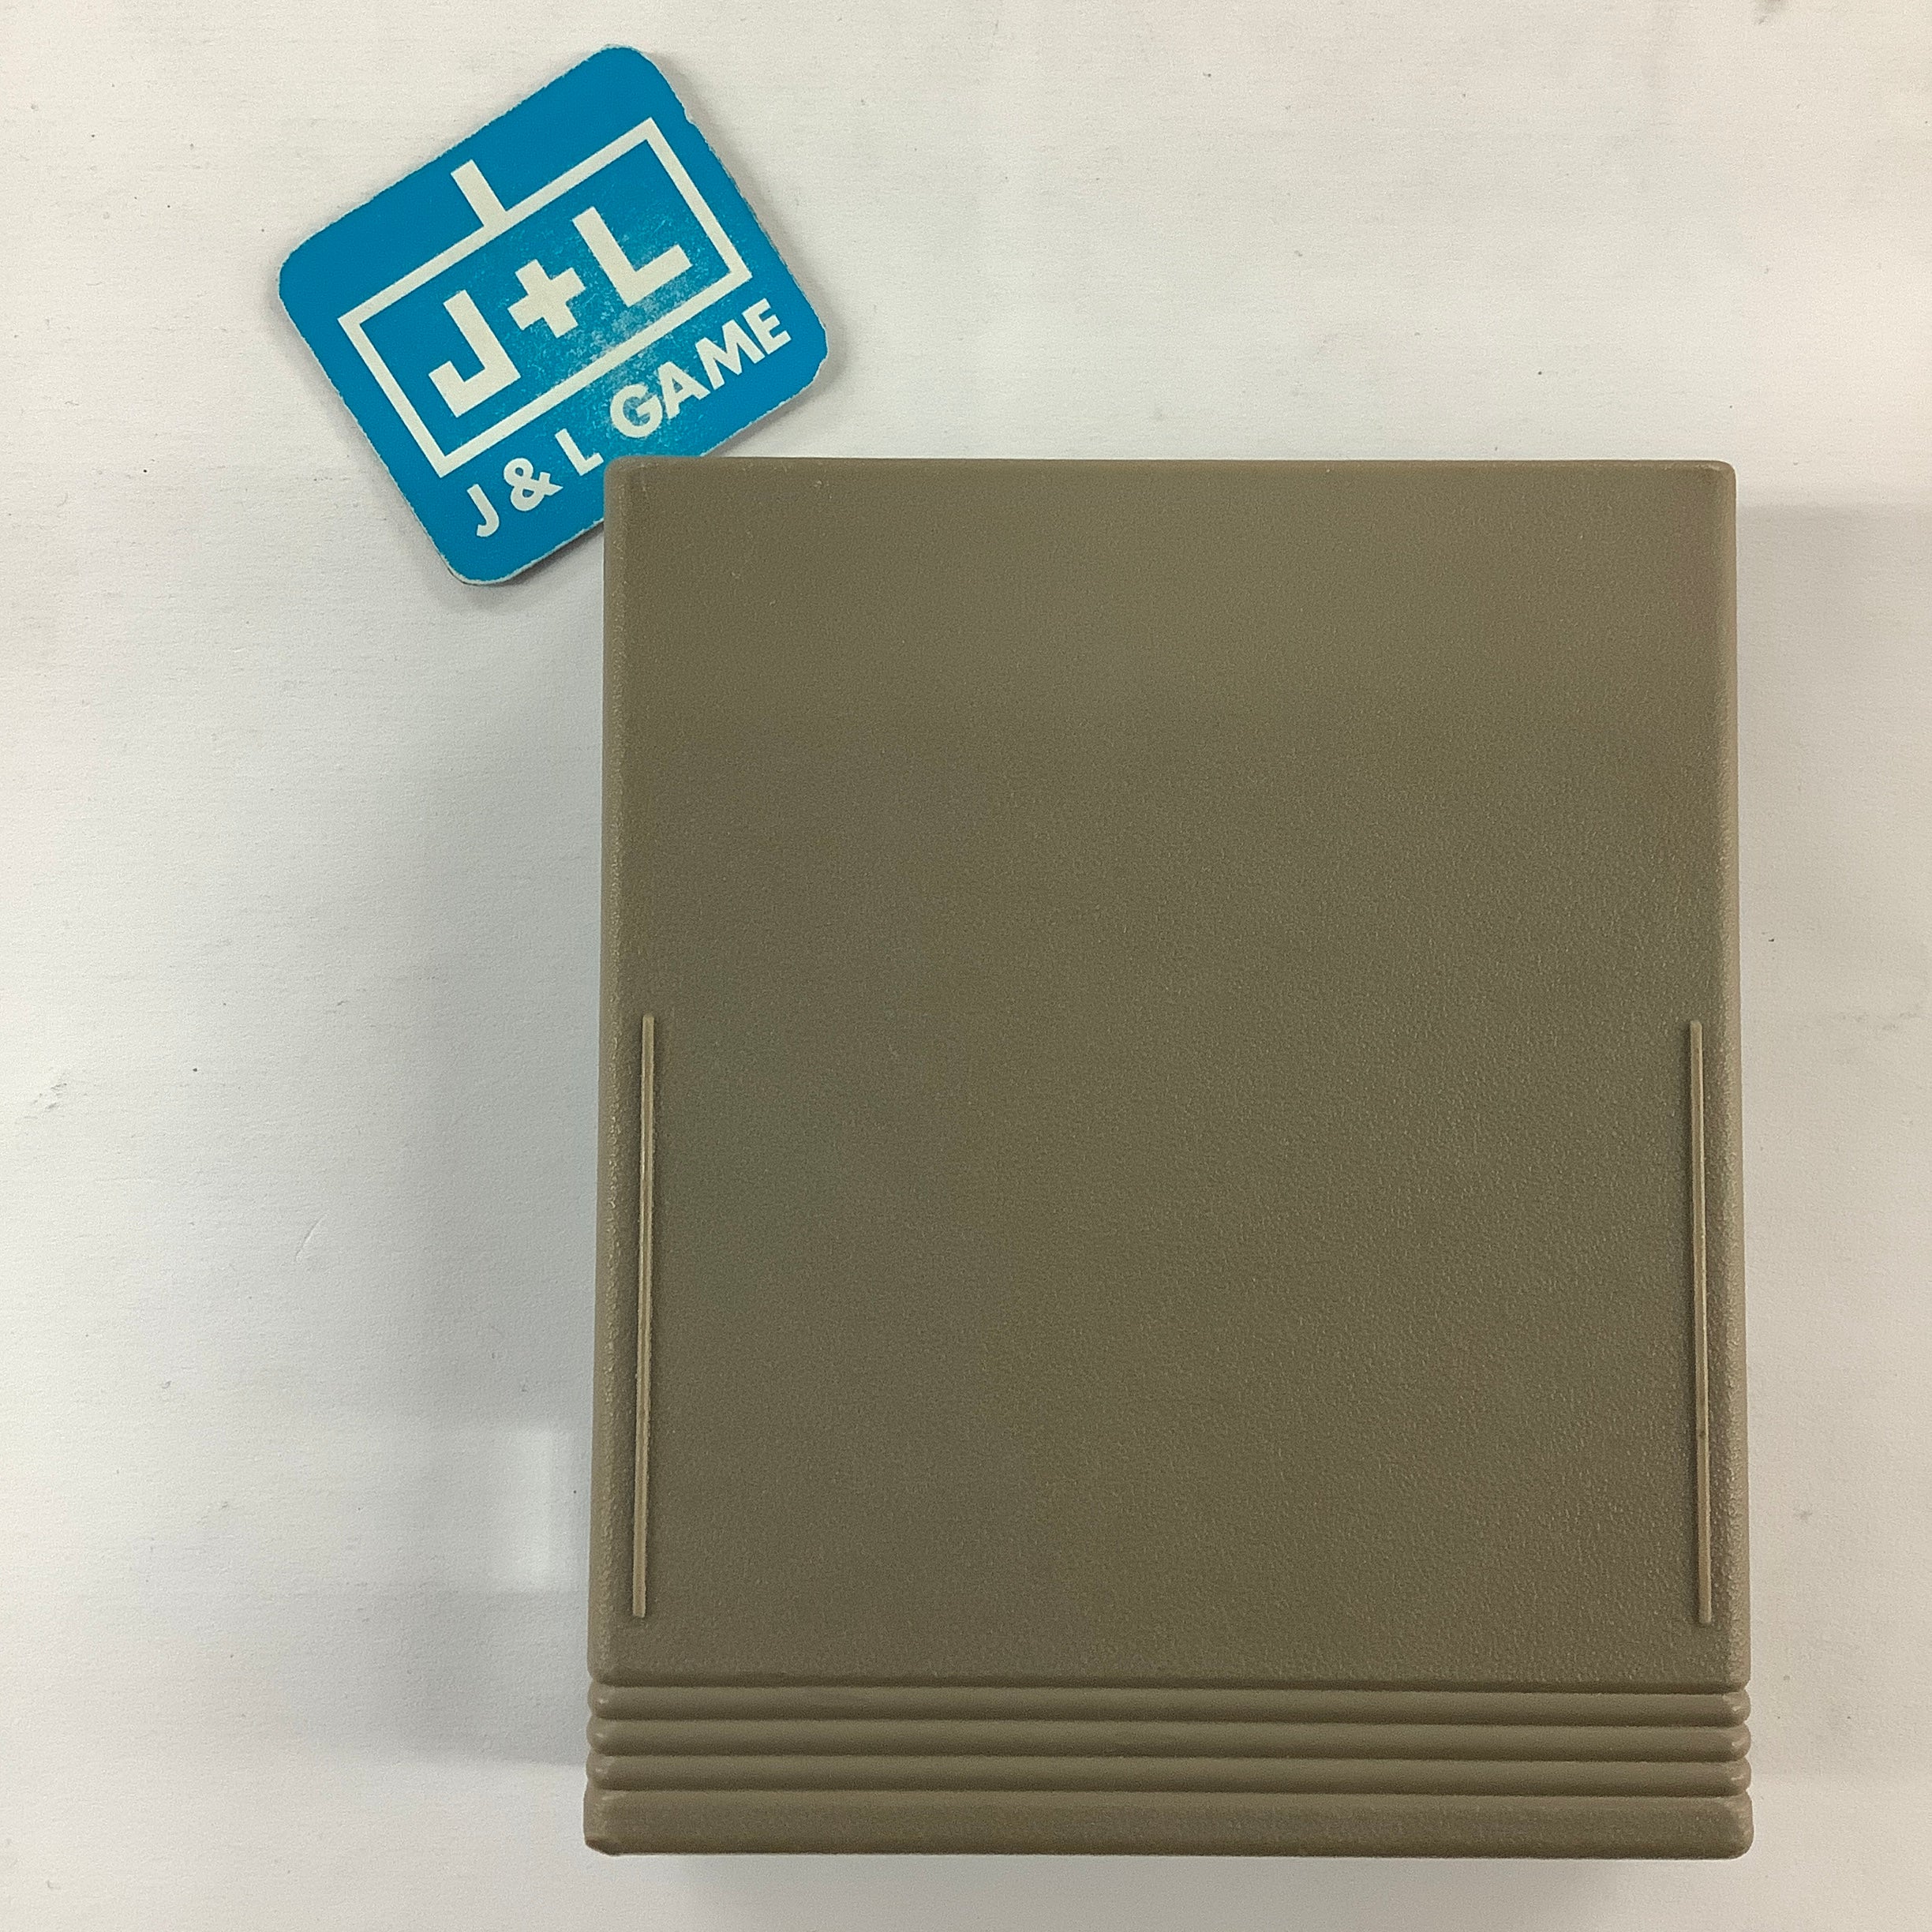 Solar Fox - Atari 2600 [Pre-Owned] Video Games CBS Electronics   